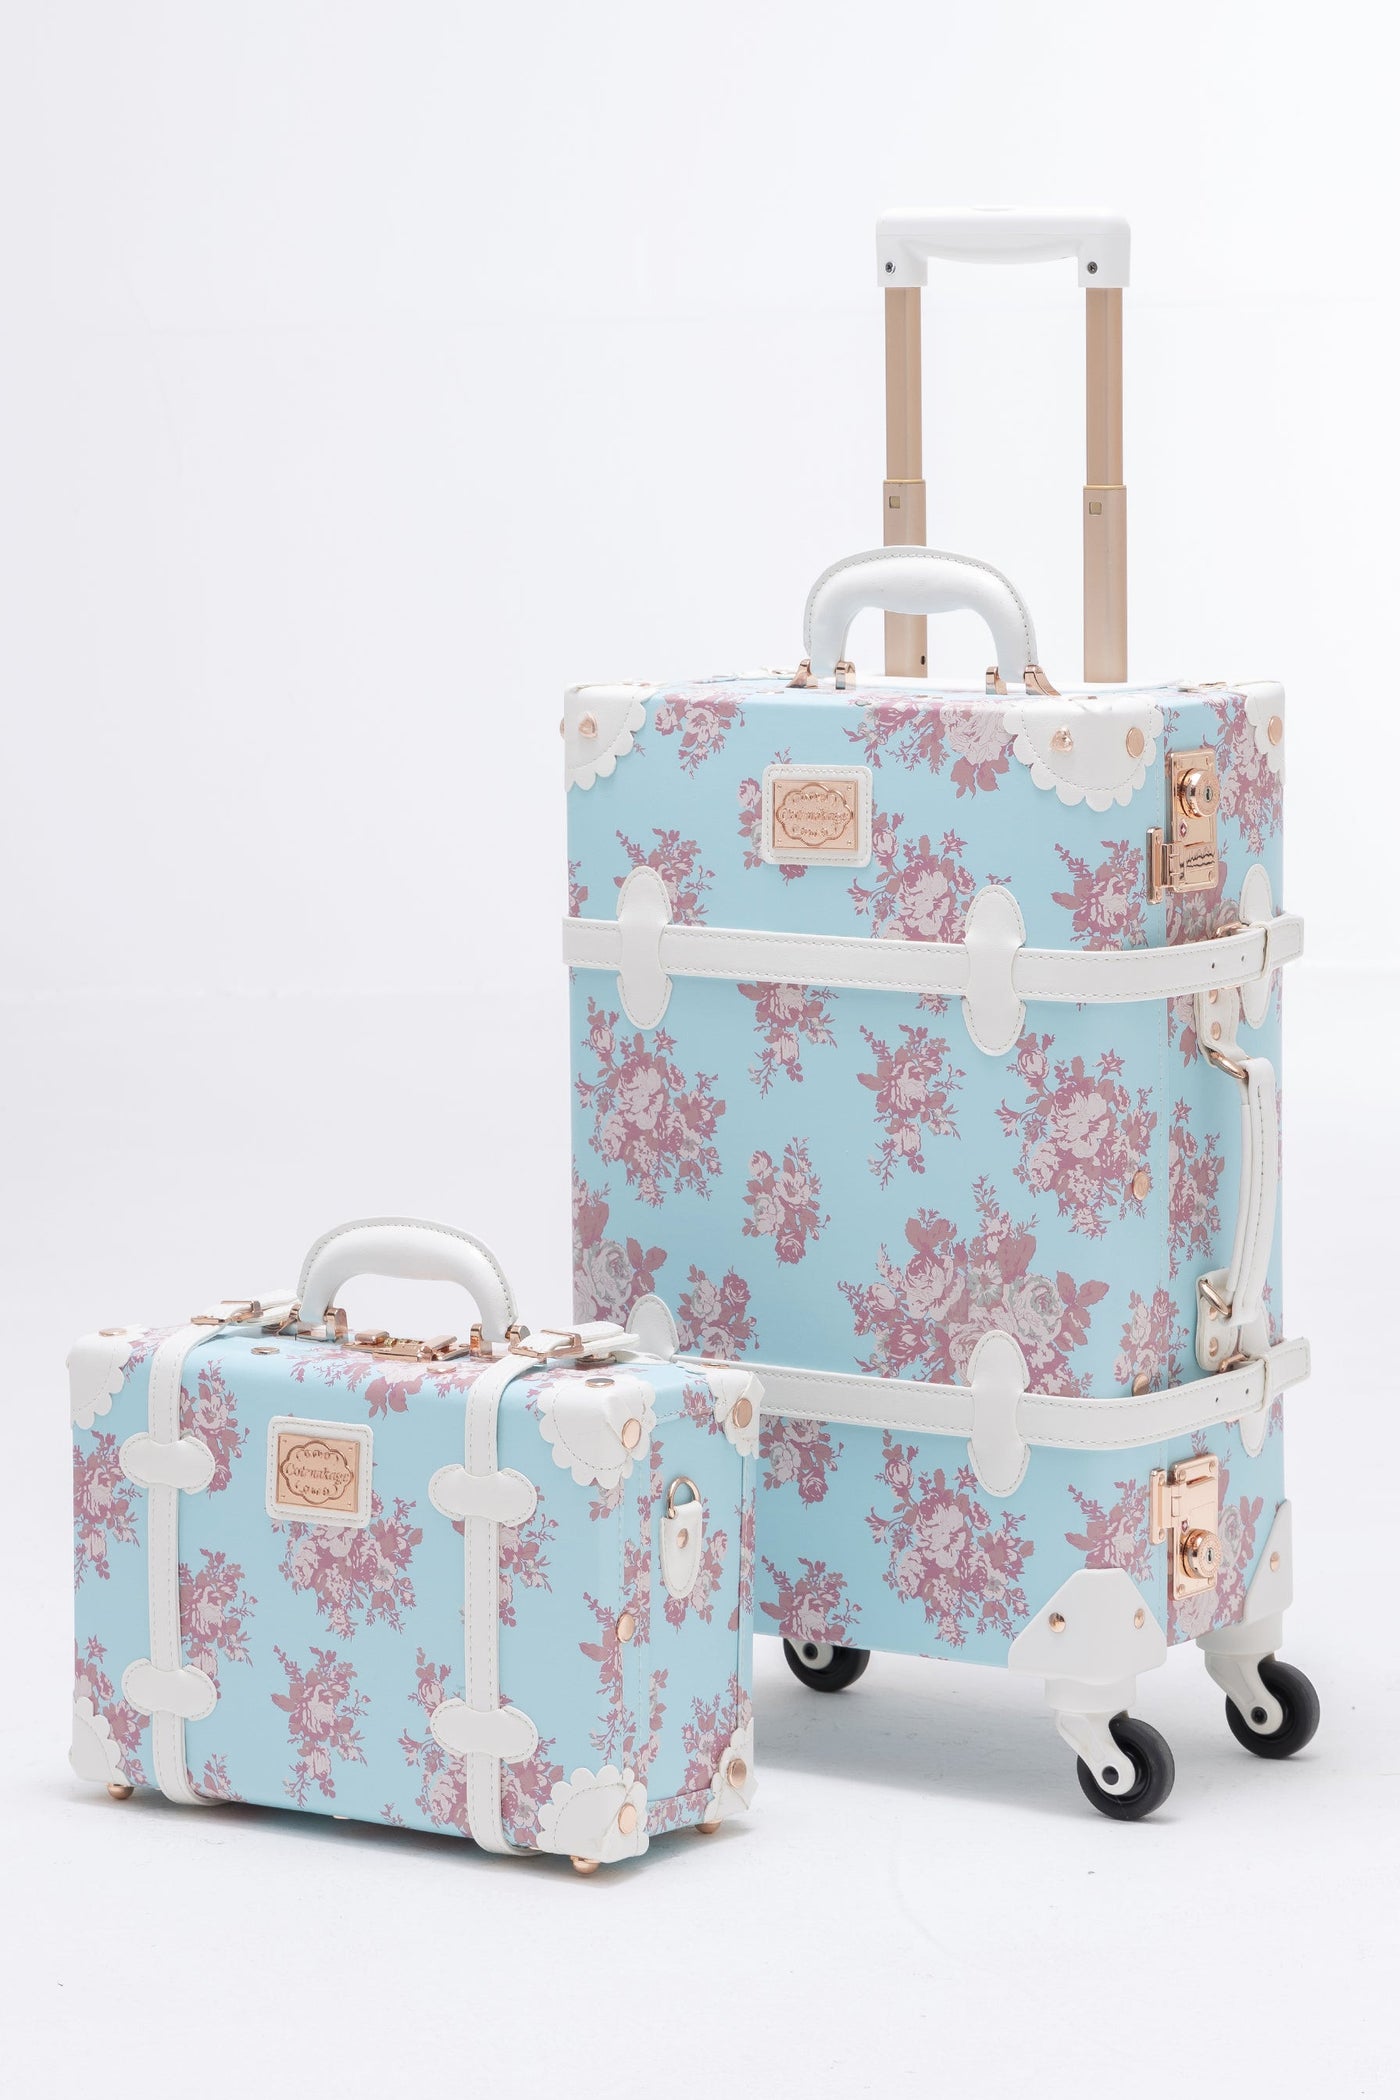 Minimalism 2 Pieces Luggage Set - Blue Floral's